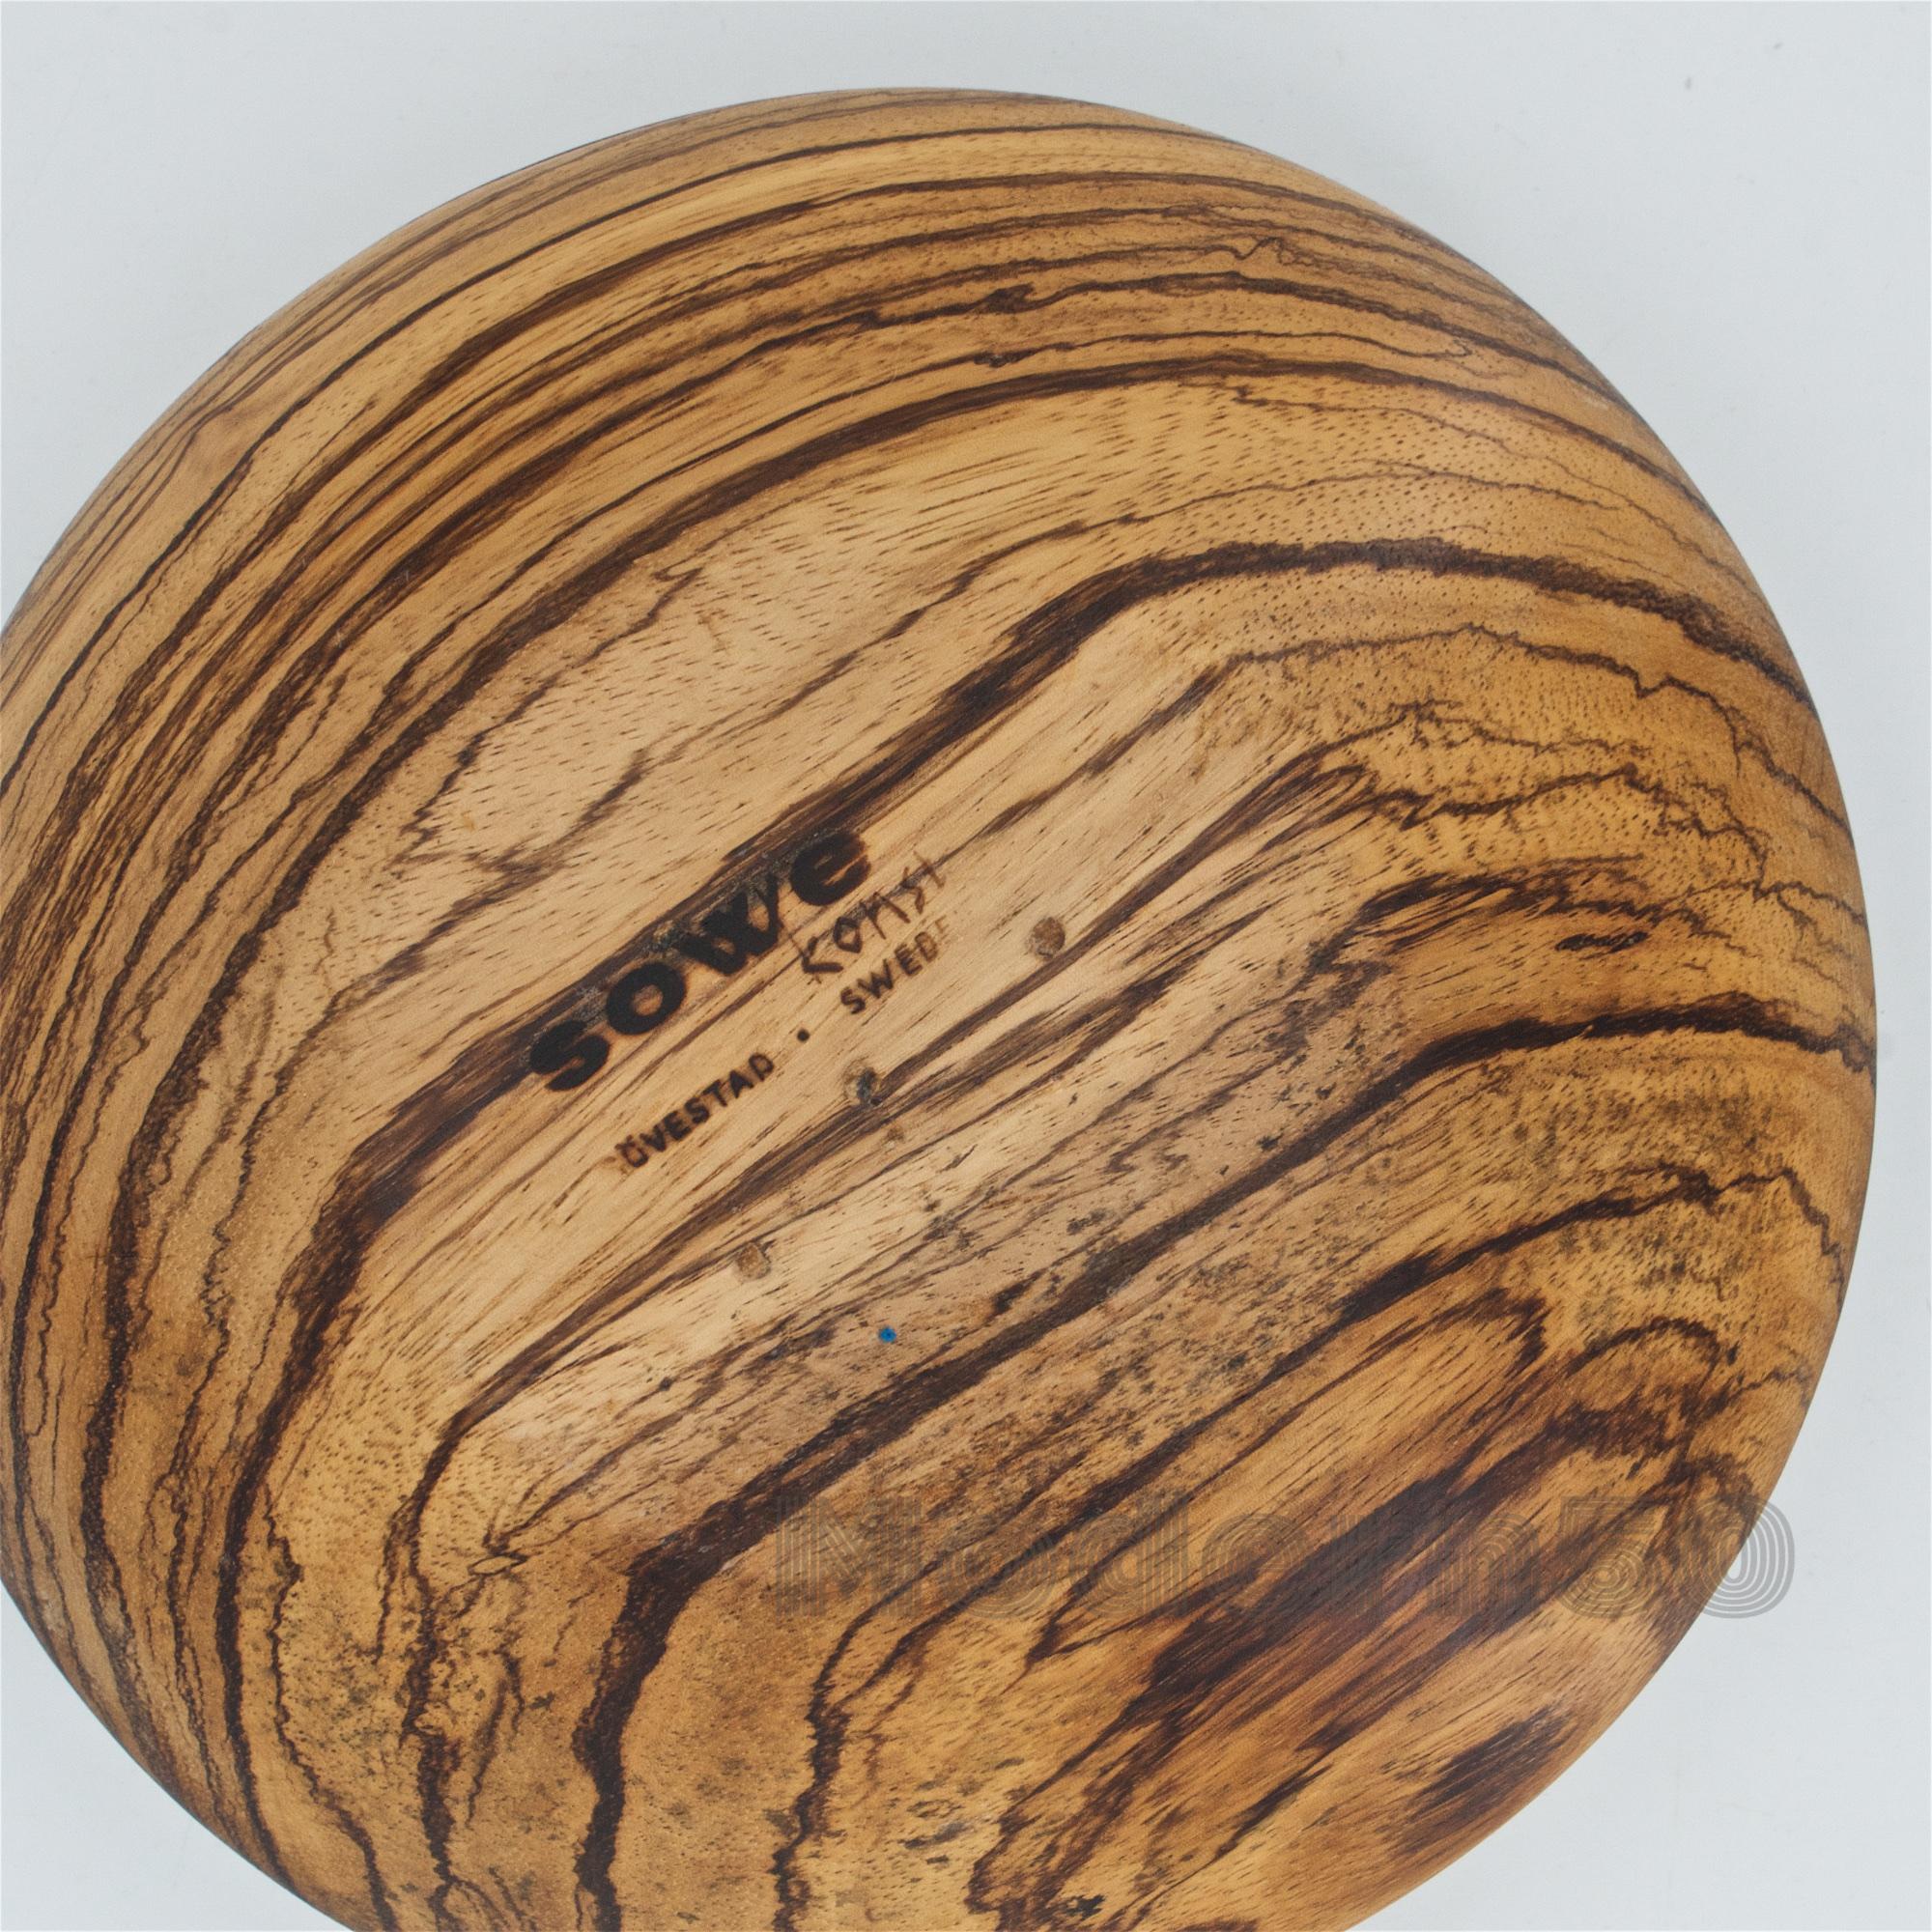 Mid-20th Century Scandinavian Zebra Wood Sculpture Centerpiece Orb Dish Bowl Space Age Mattsson For Sale